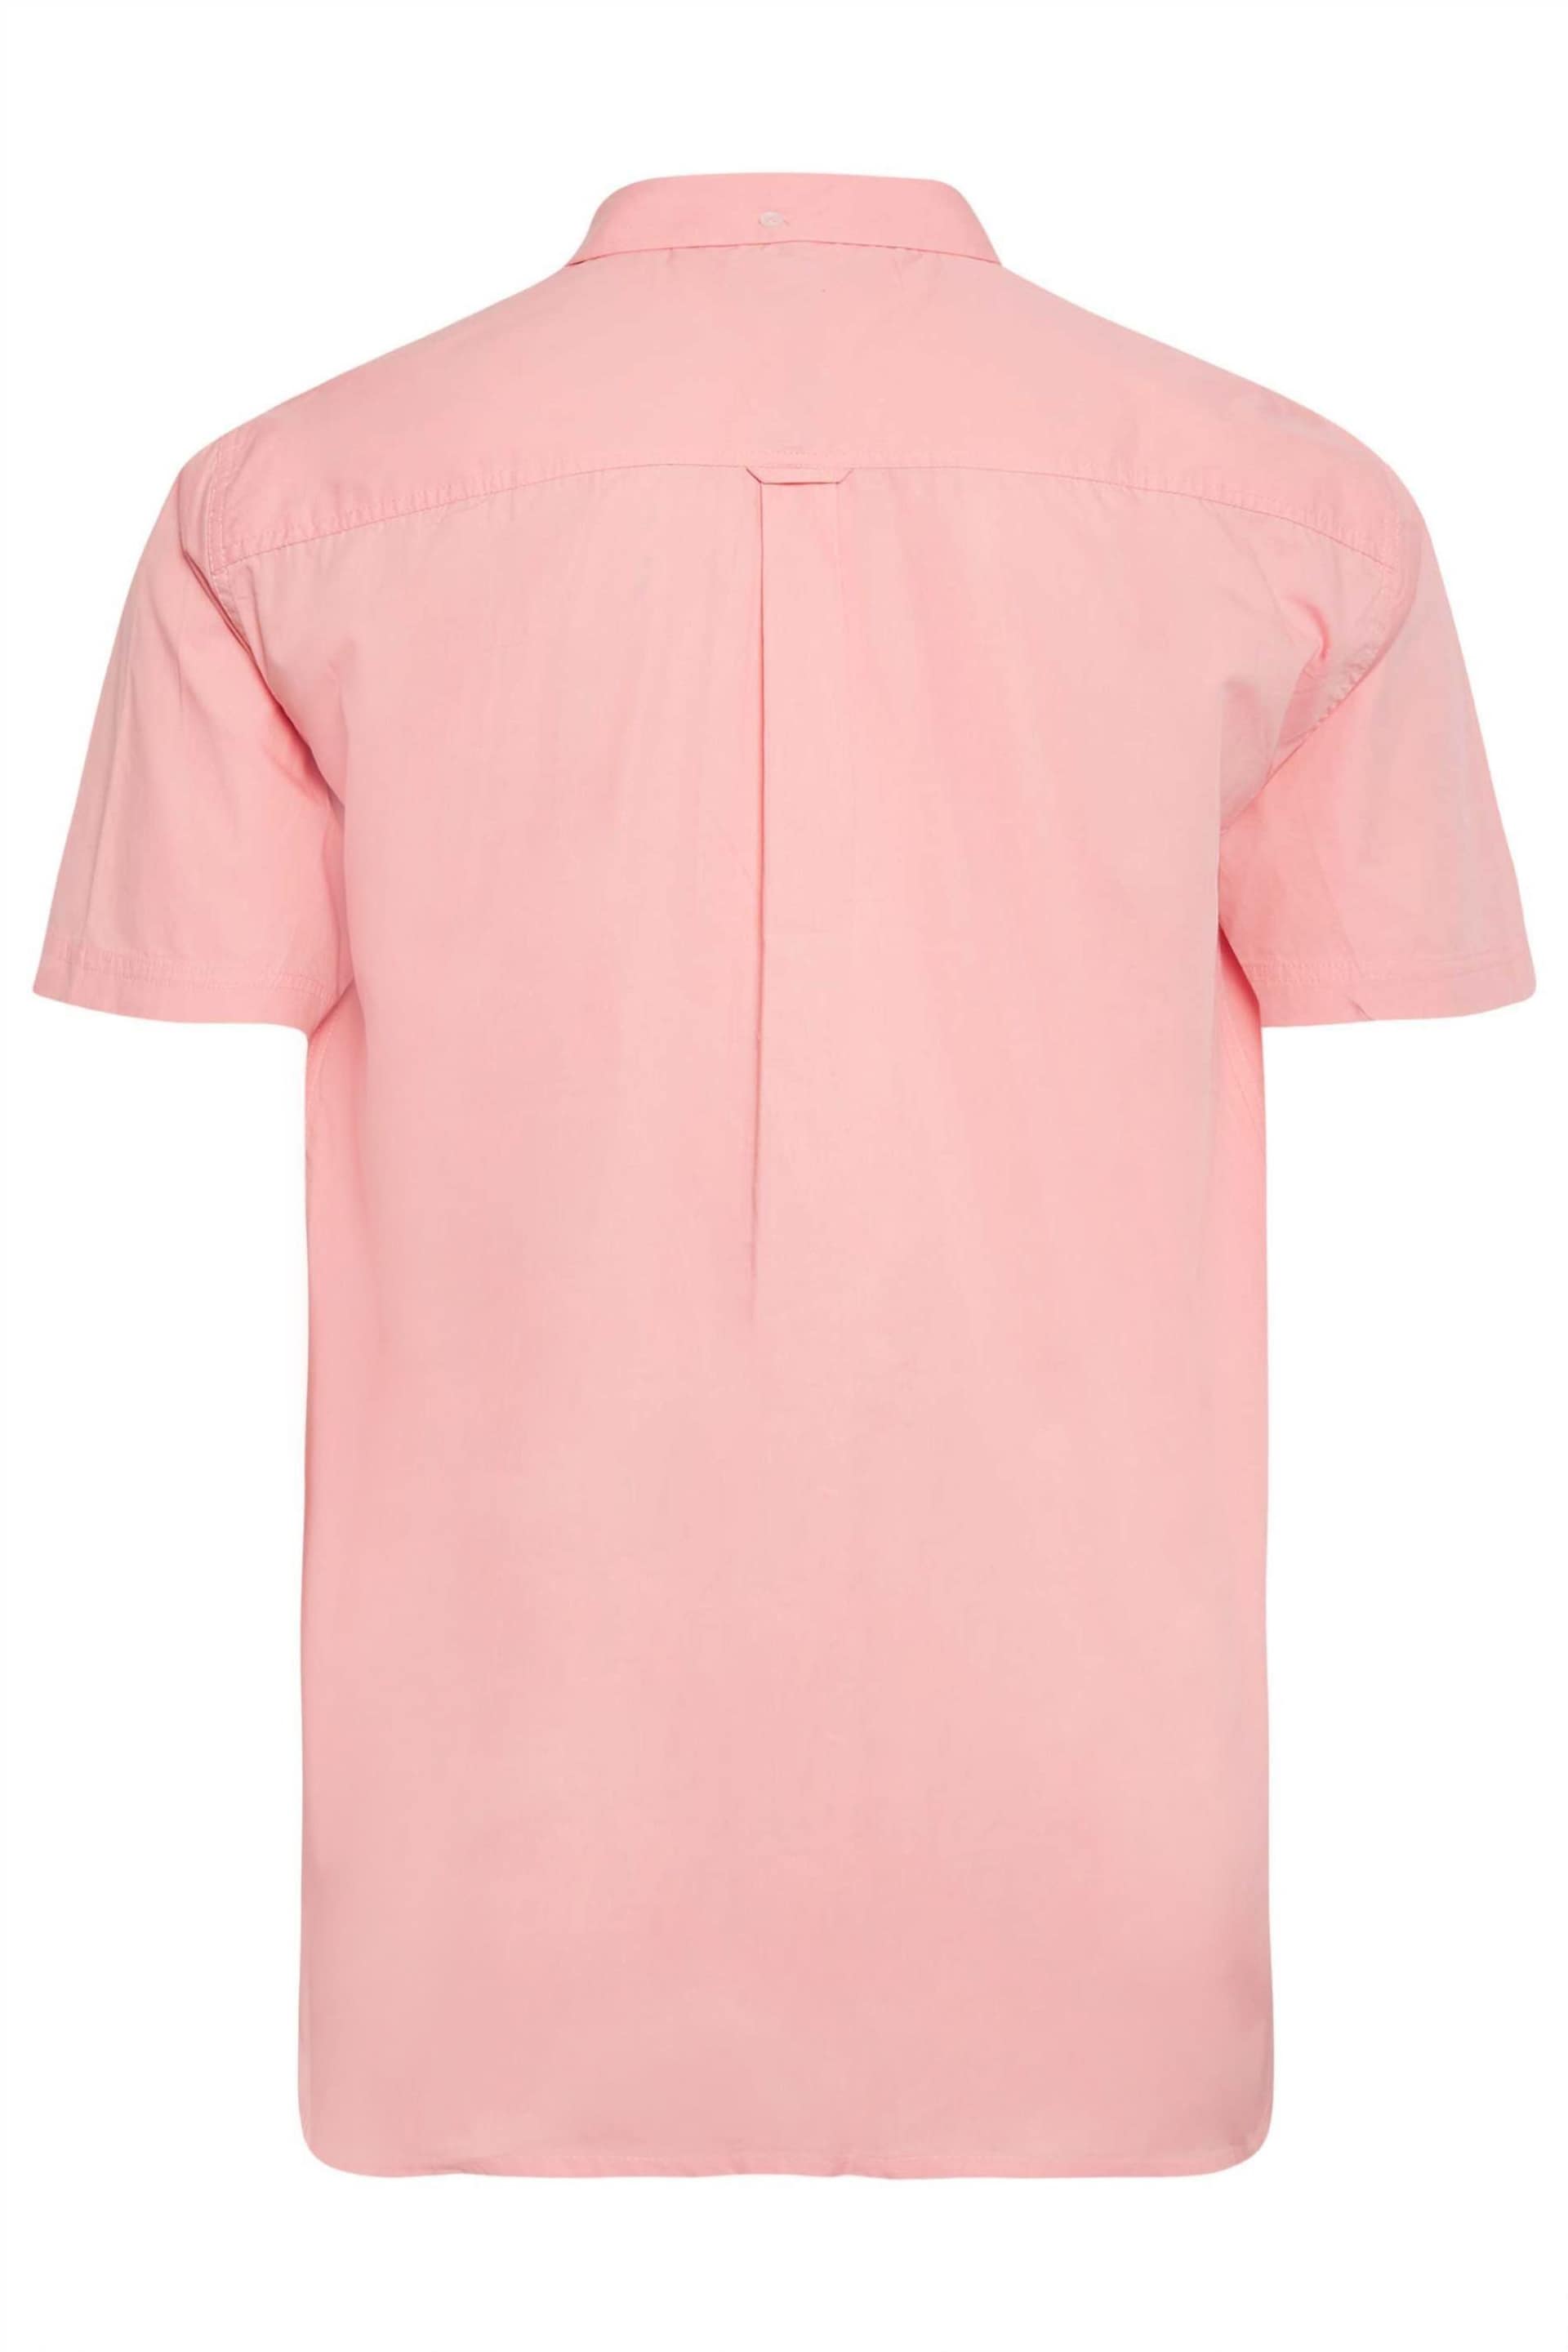 BadRhino Big & Tall Pink Short Sleeve Poplin Shirt - Image 3 of 3